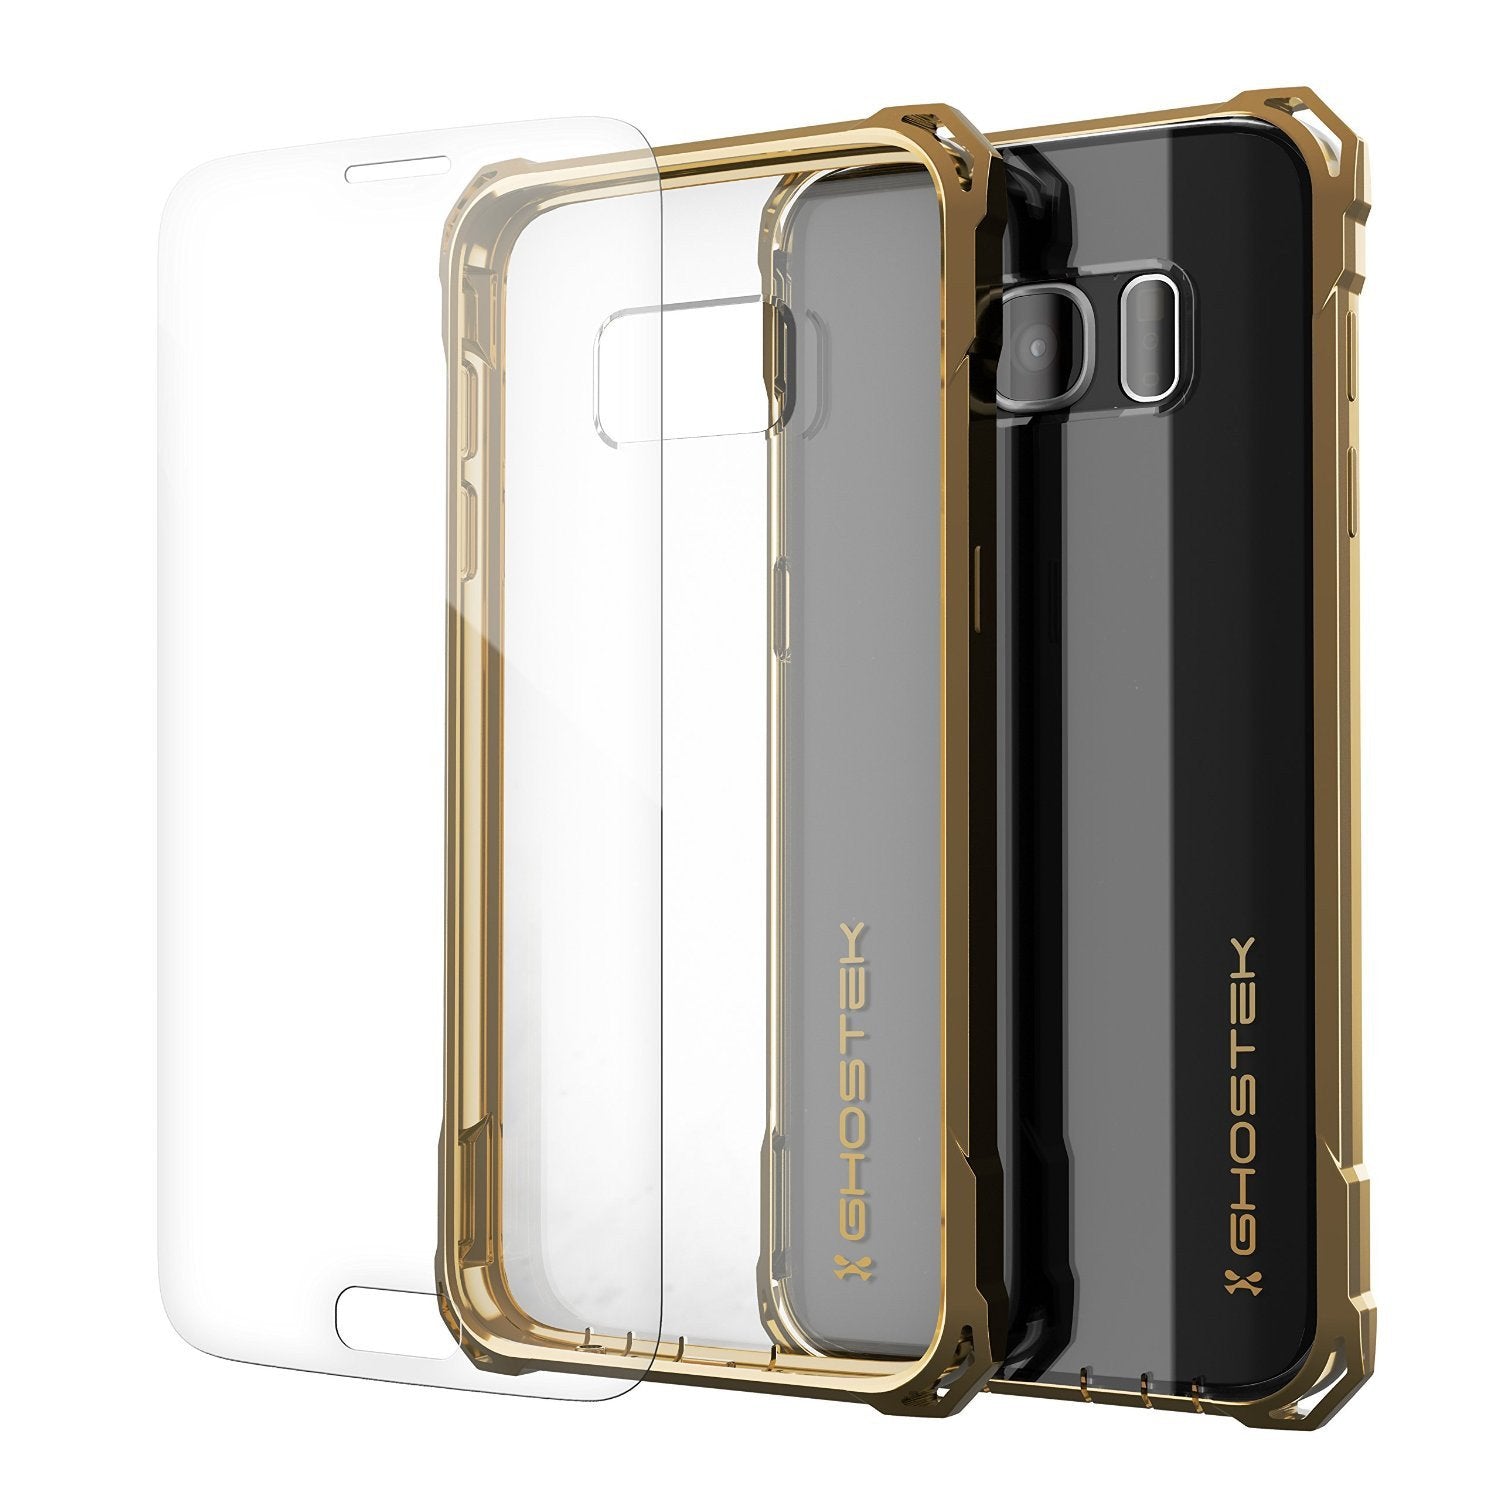 Galaxy S7 Case, Ghostek® Covert Gold Series Premium Impact Cover | Lifetime Warranty Exchange